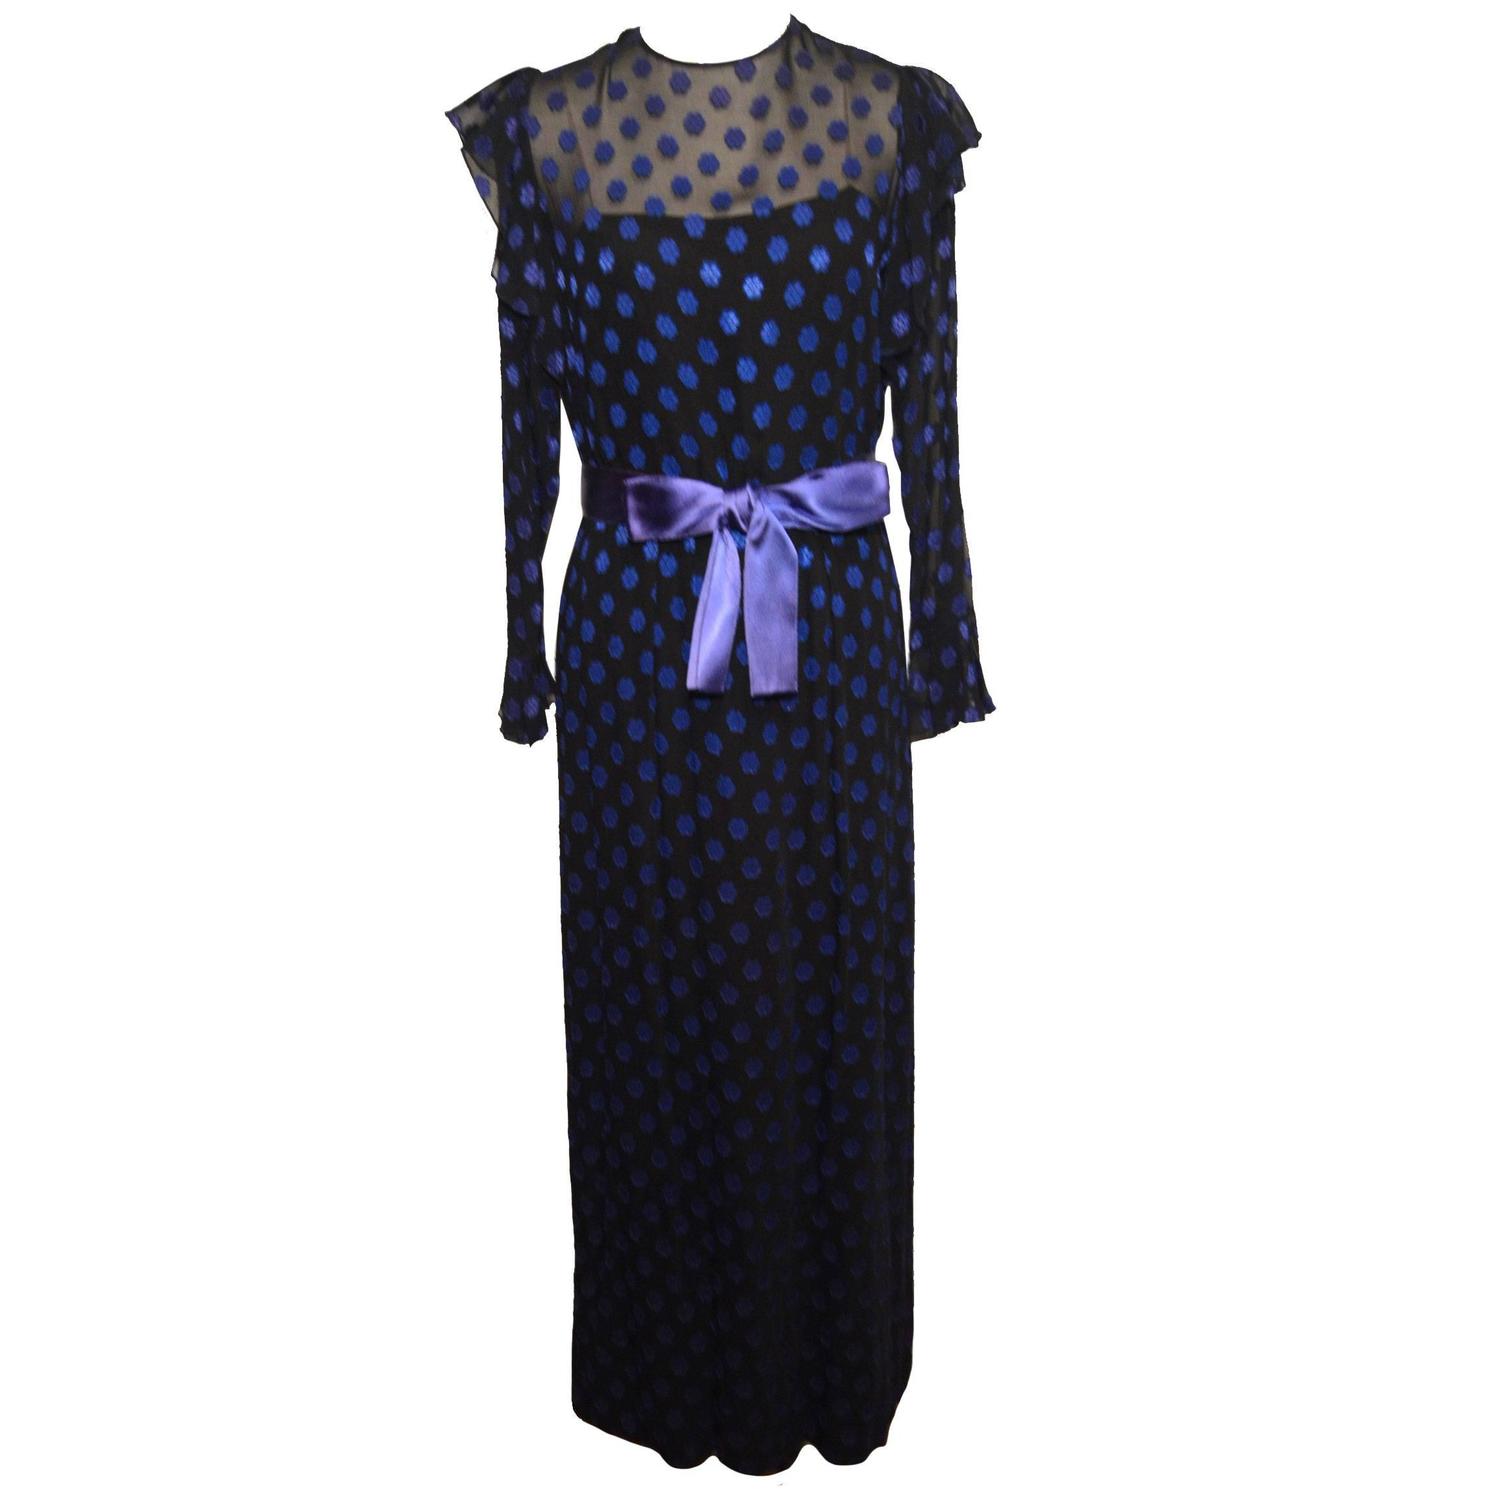 Christian Dior 1940s Black and Blue Polka Dot Dress For Sale at 1stdibs